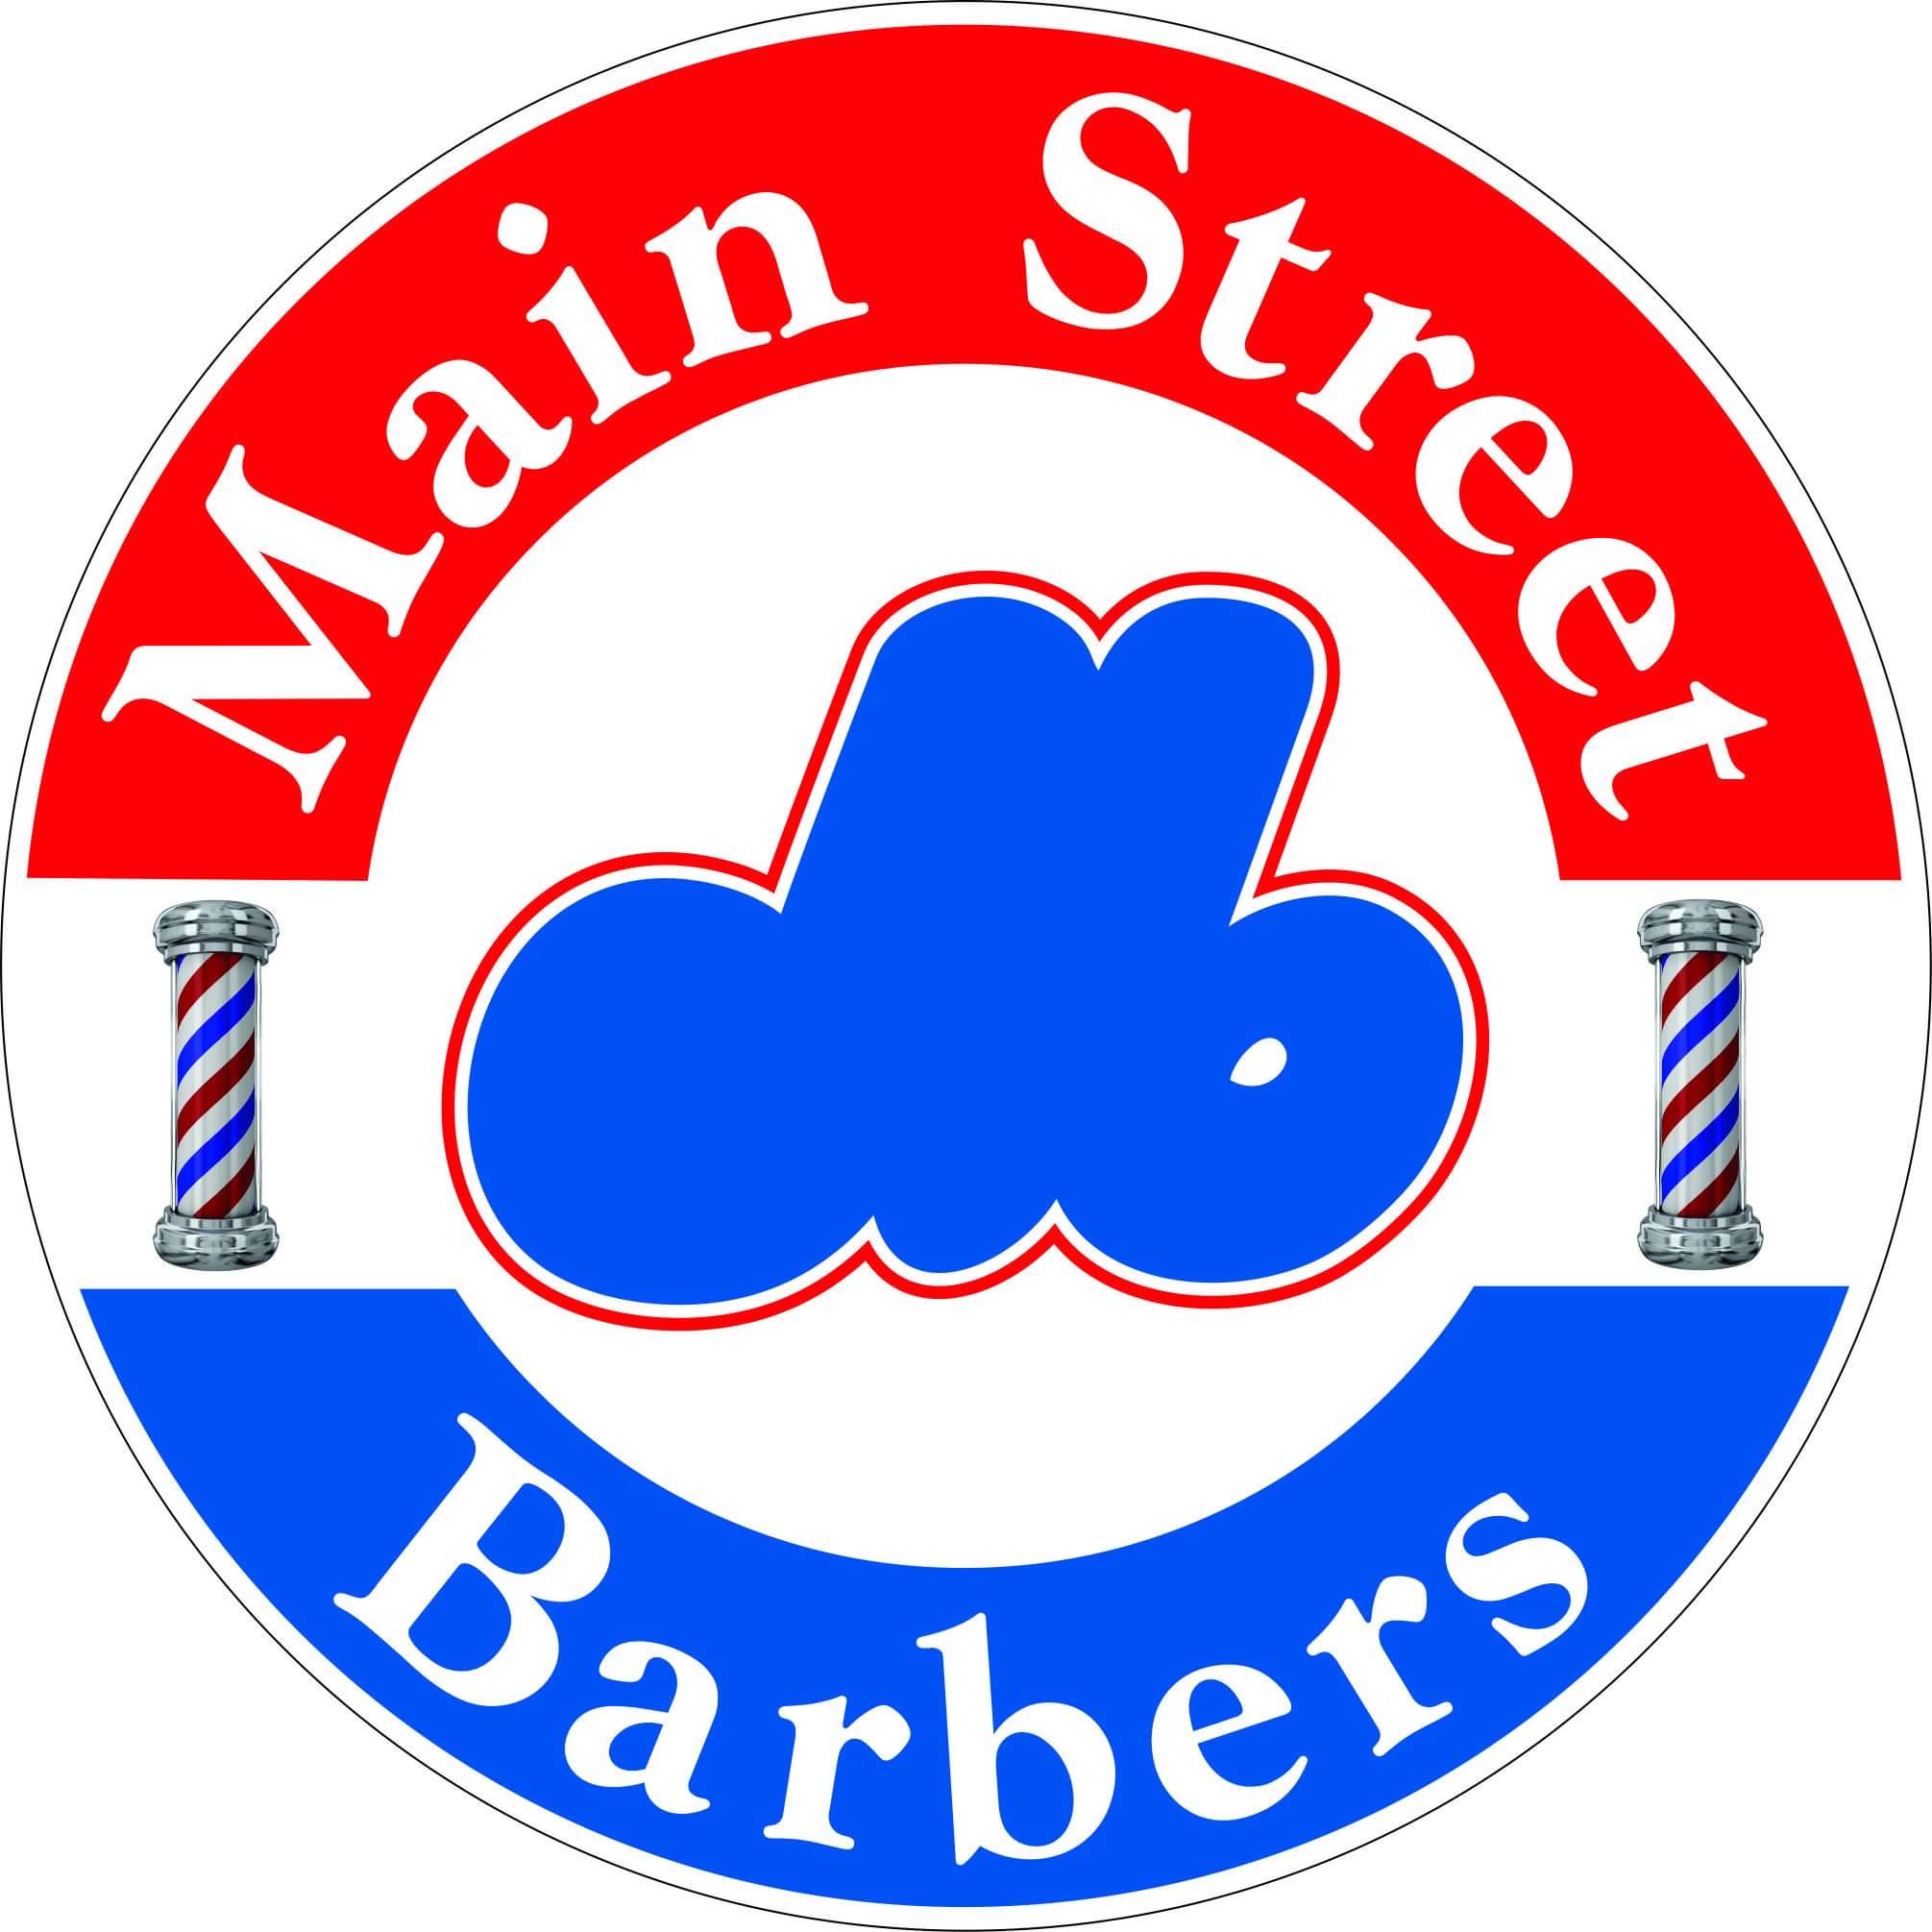 Main Street Barbers